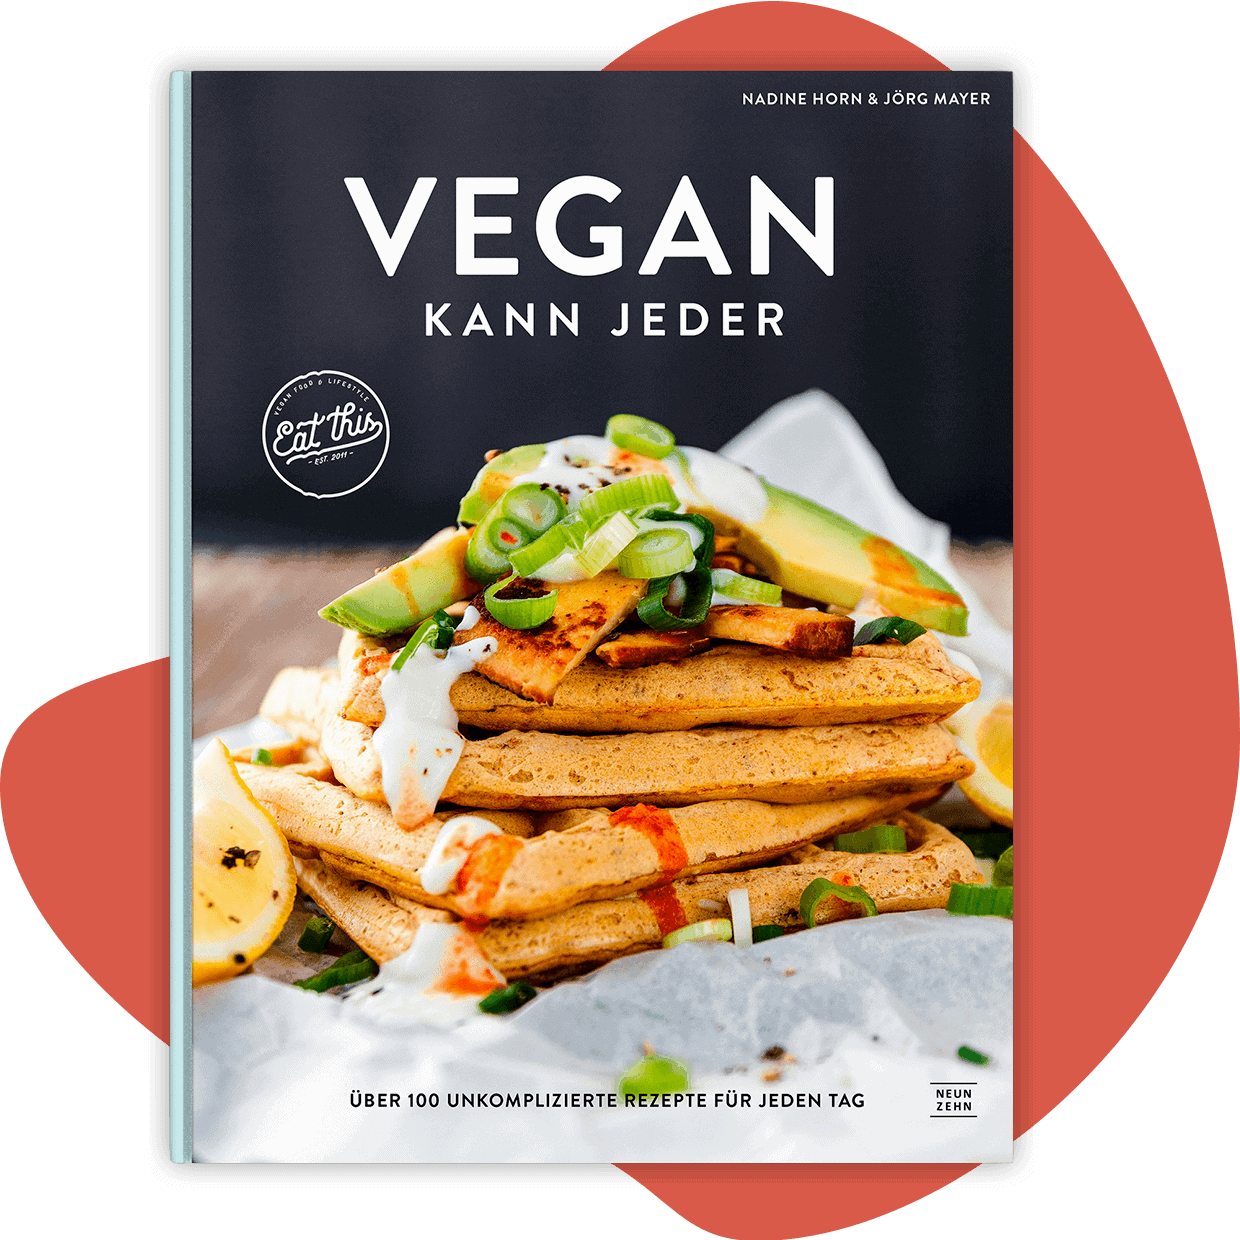 Vegan kann jeder – Kochbuch von Nadine Horn & Jörg Mayer